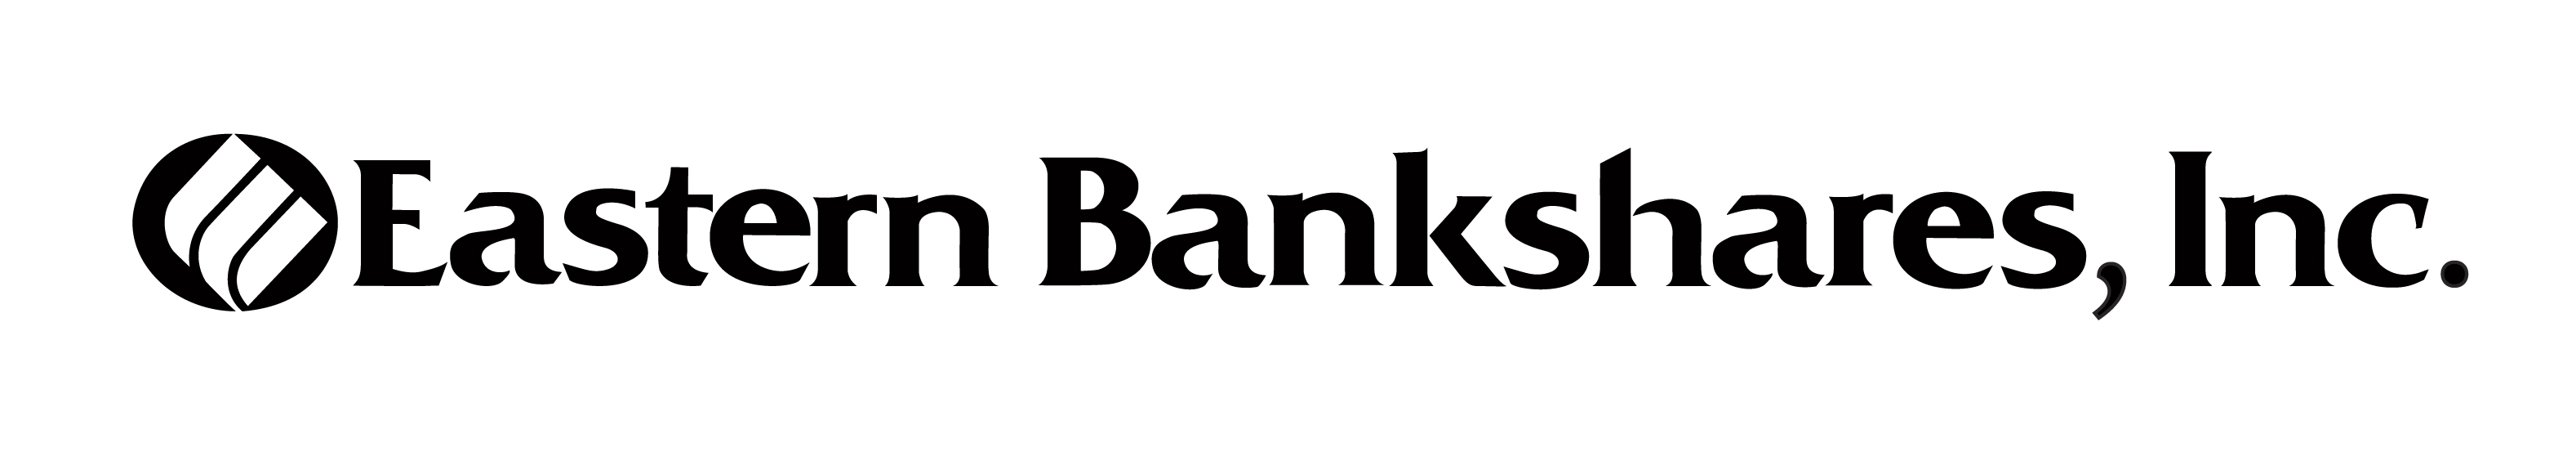 Eastern Bankshares LogoB&W_1.jpg